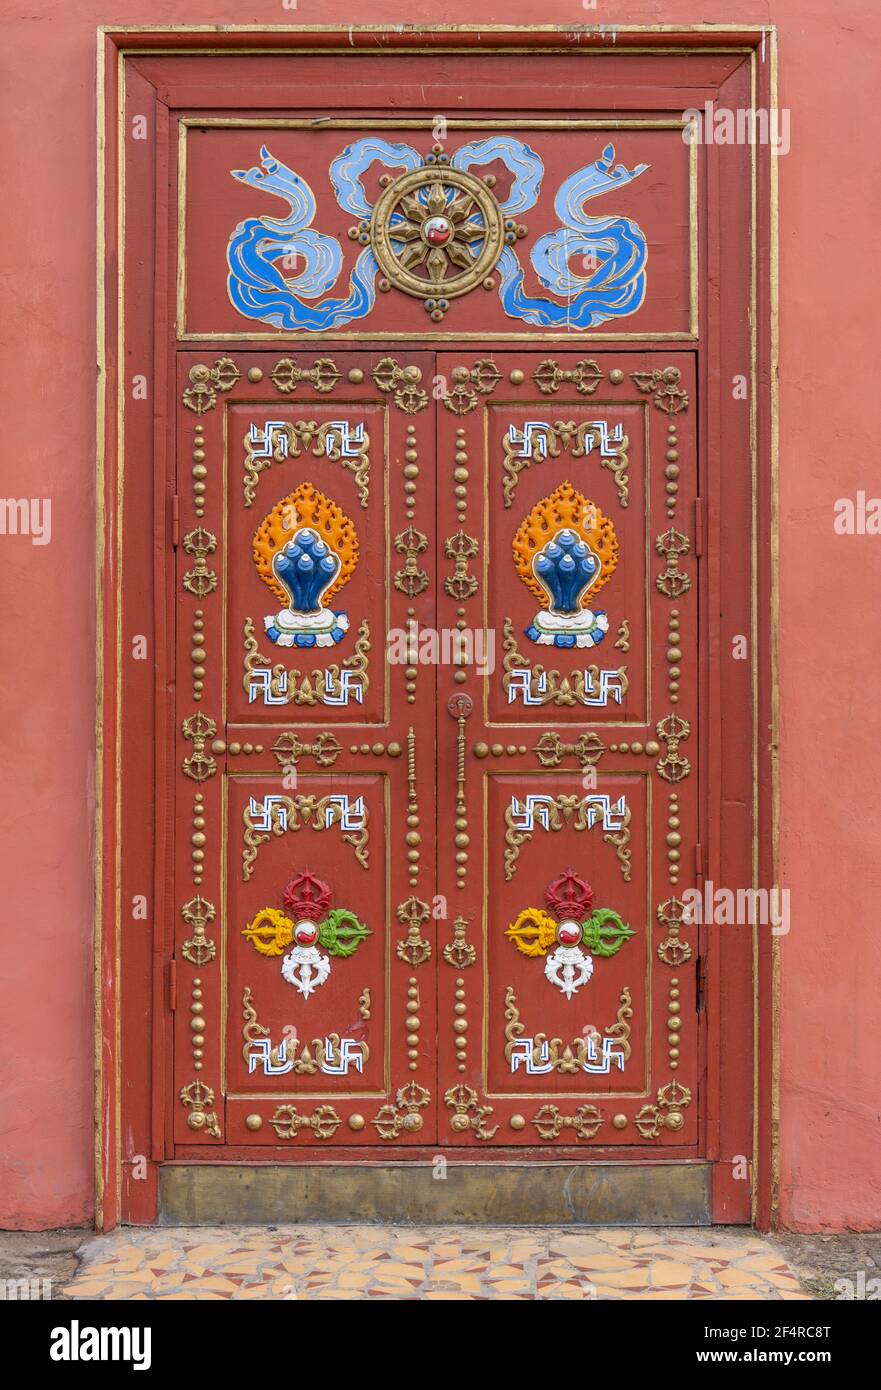 Ulaanbaatar, Mongolei - 25. August 2019: Eine dekorative Tür des Gandantegchinlen-Klosters in Ulaanbaatar. Stockfoto